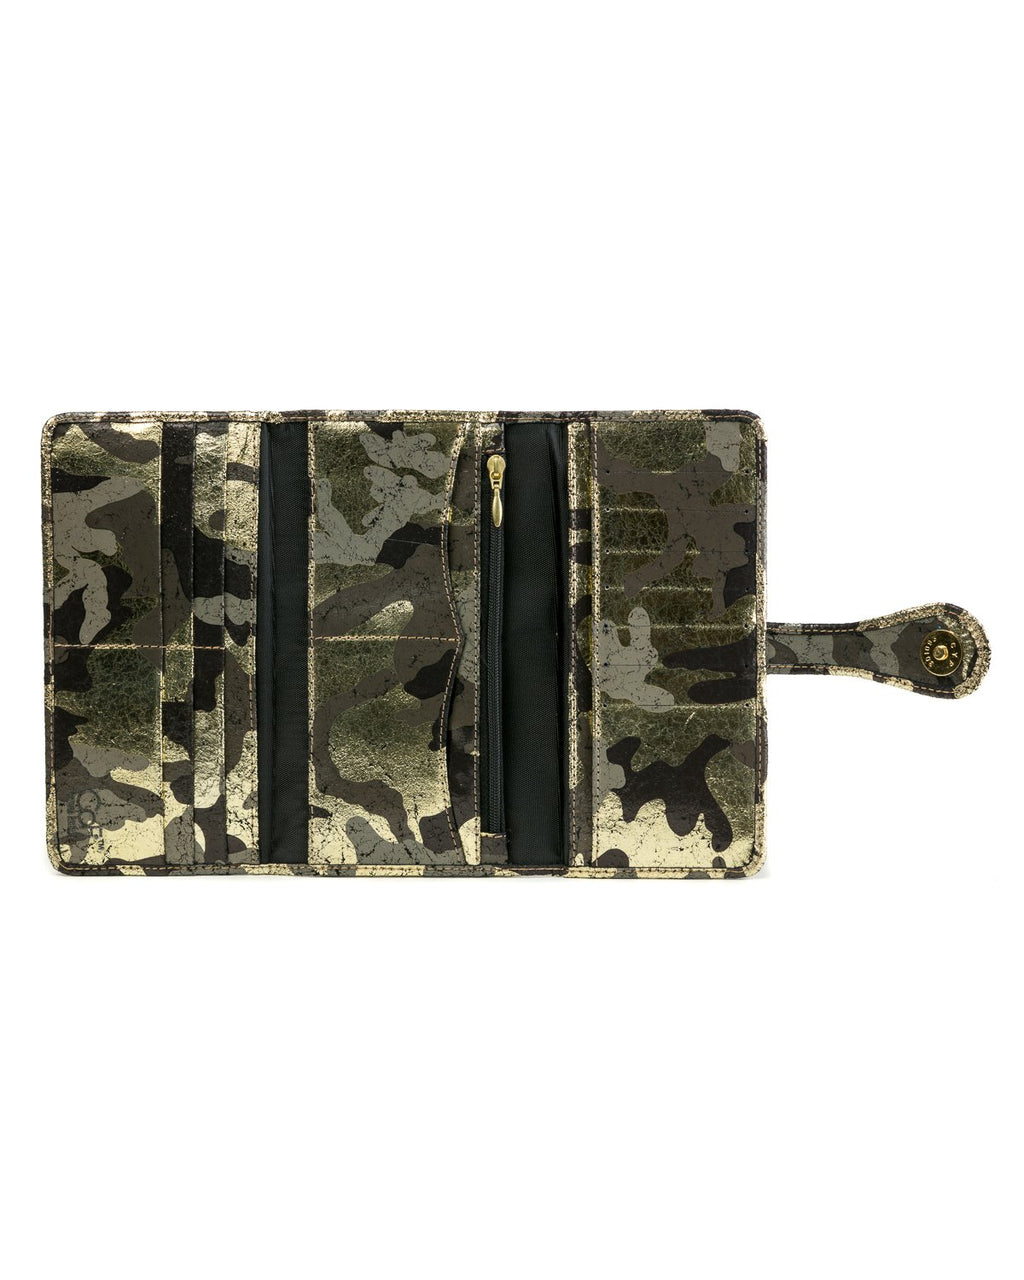 Mila Trifold Wallet: Black Gold Camouflage – CoFi Leathers